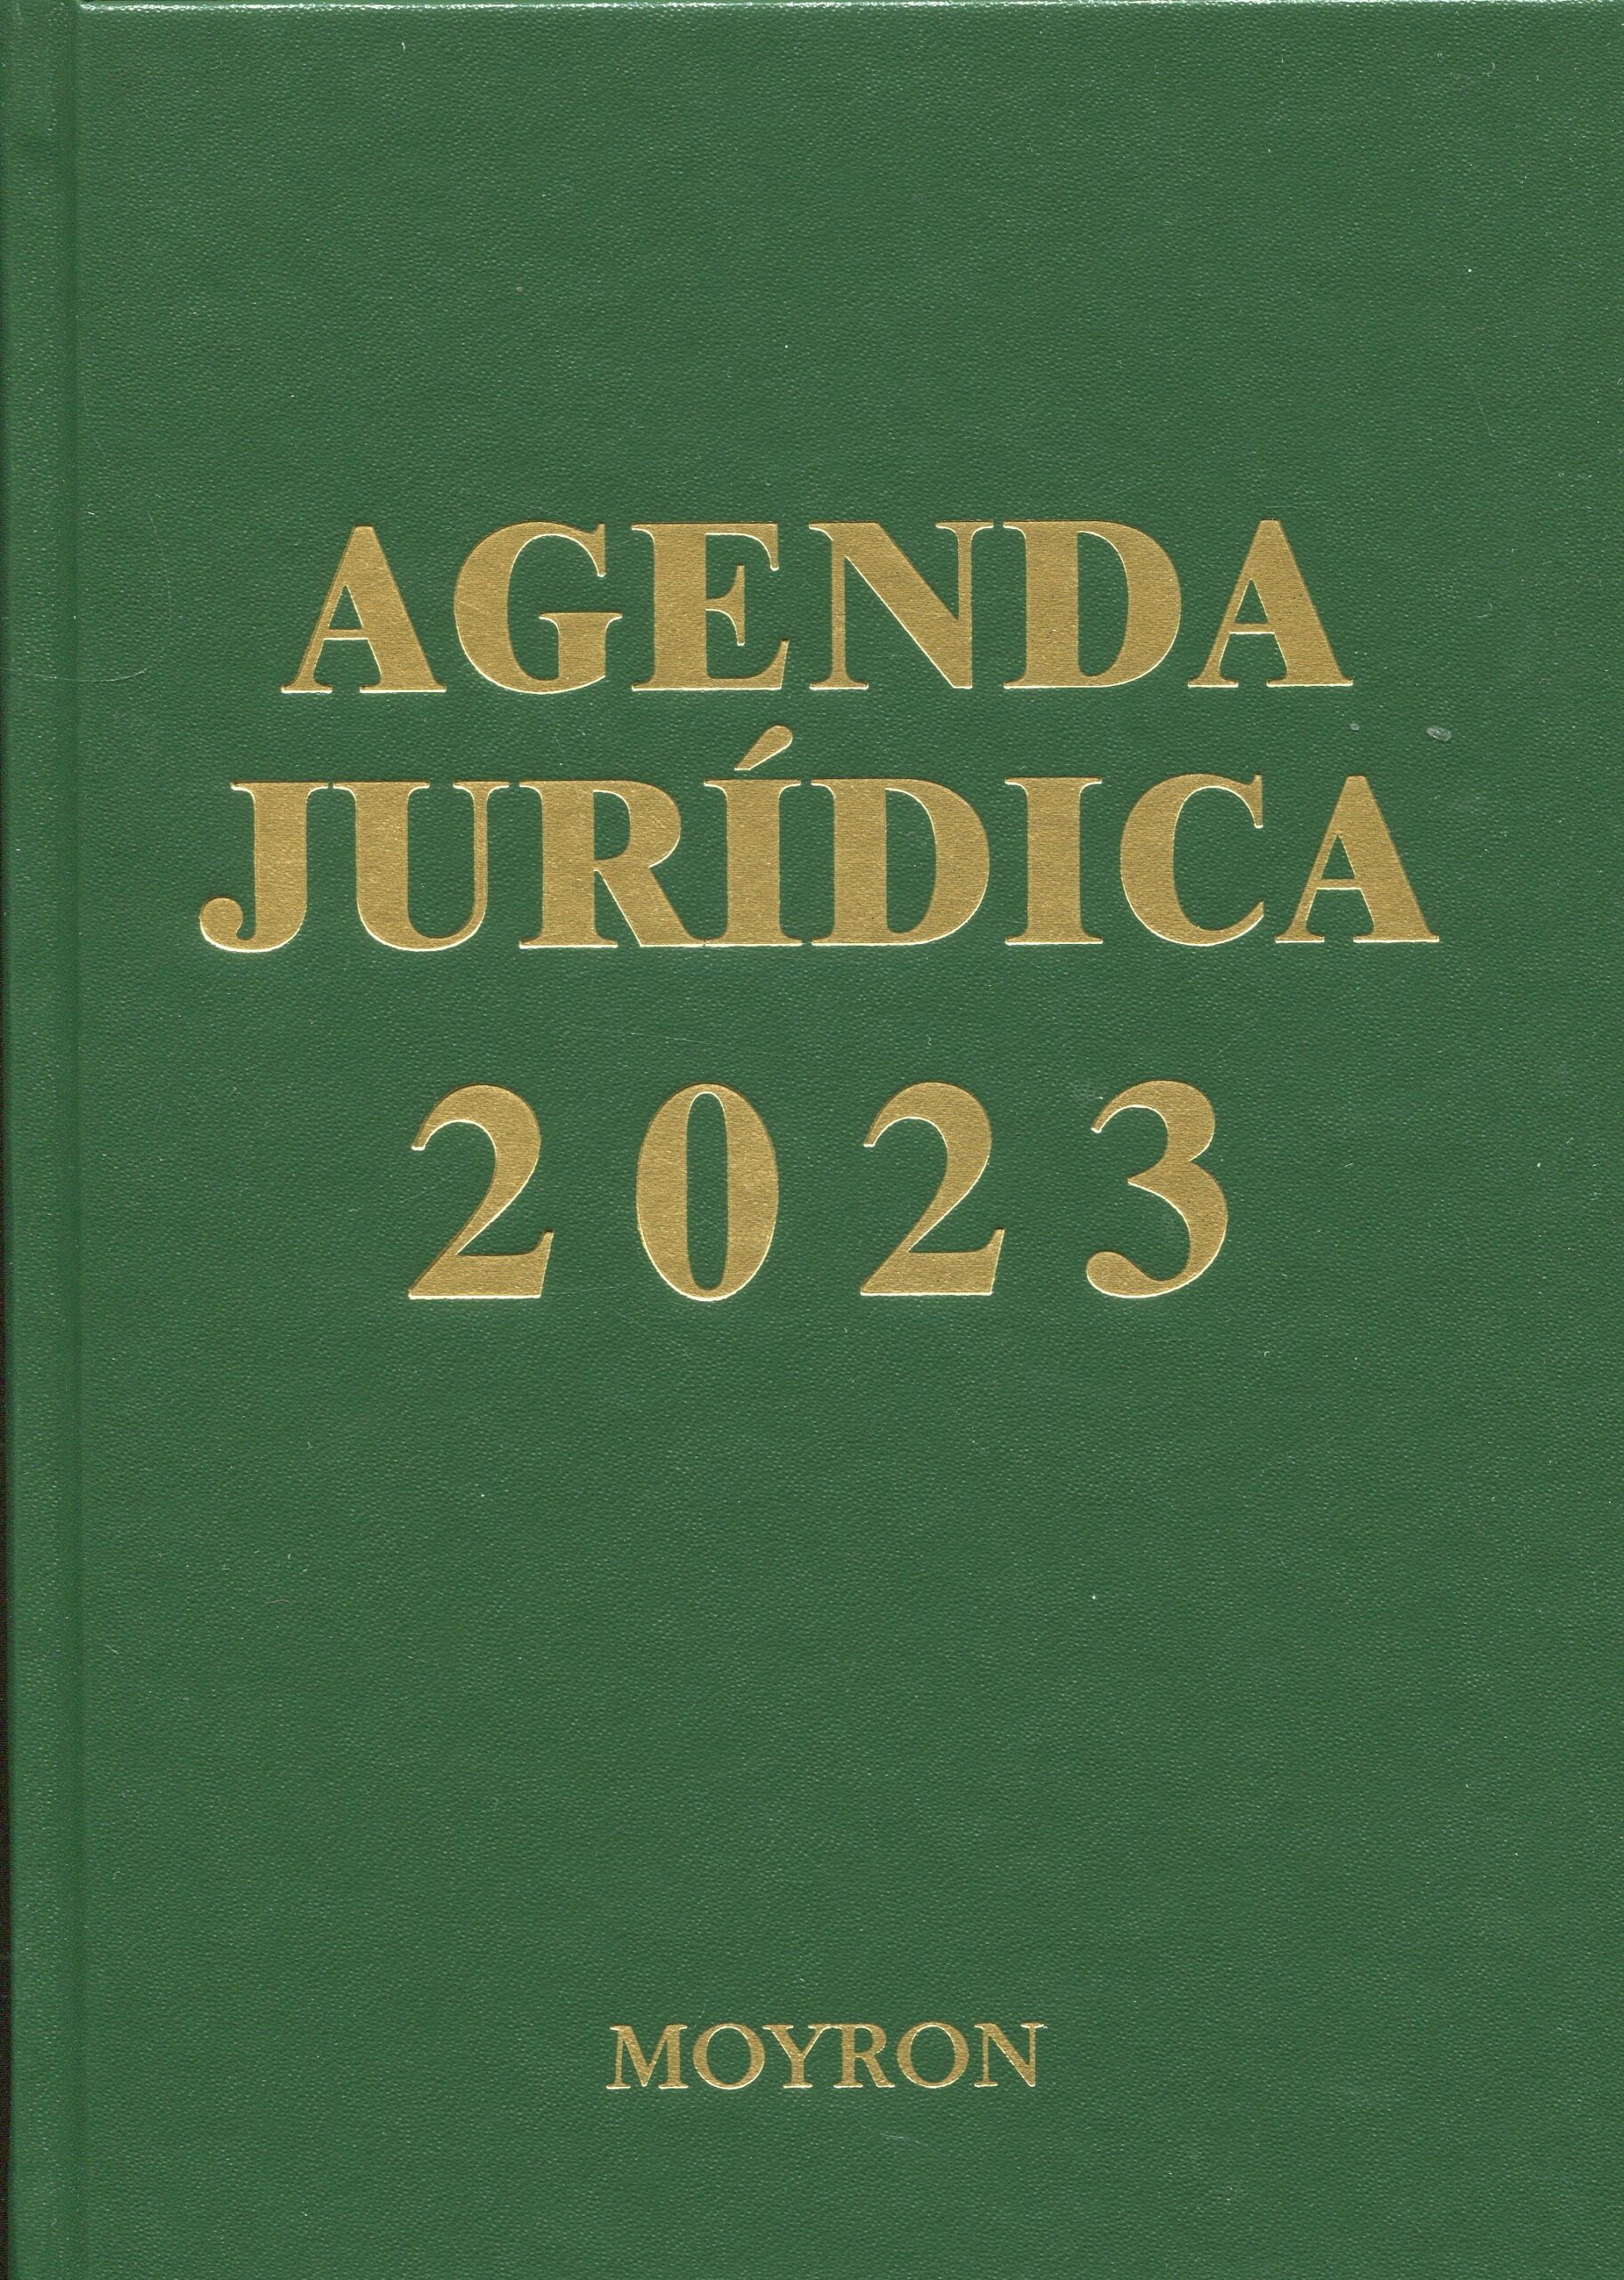 Agenda Jurídica Moyron 2023